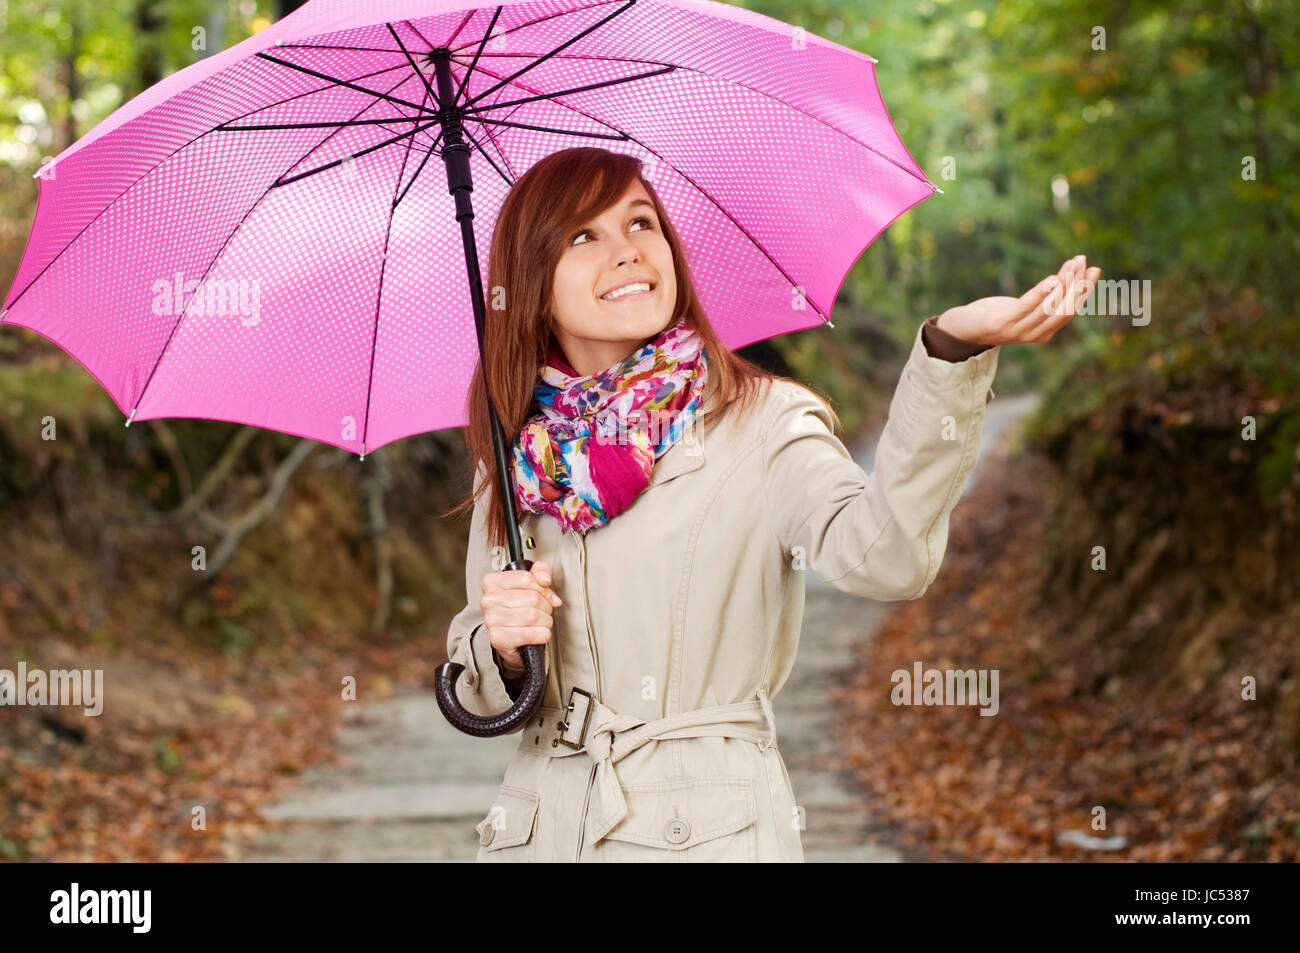 Beautiful girl with umbrella checking for rain Stock Photo - Alamy